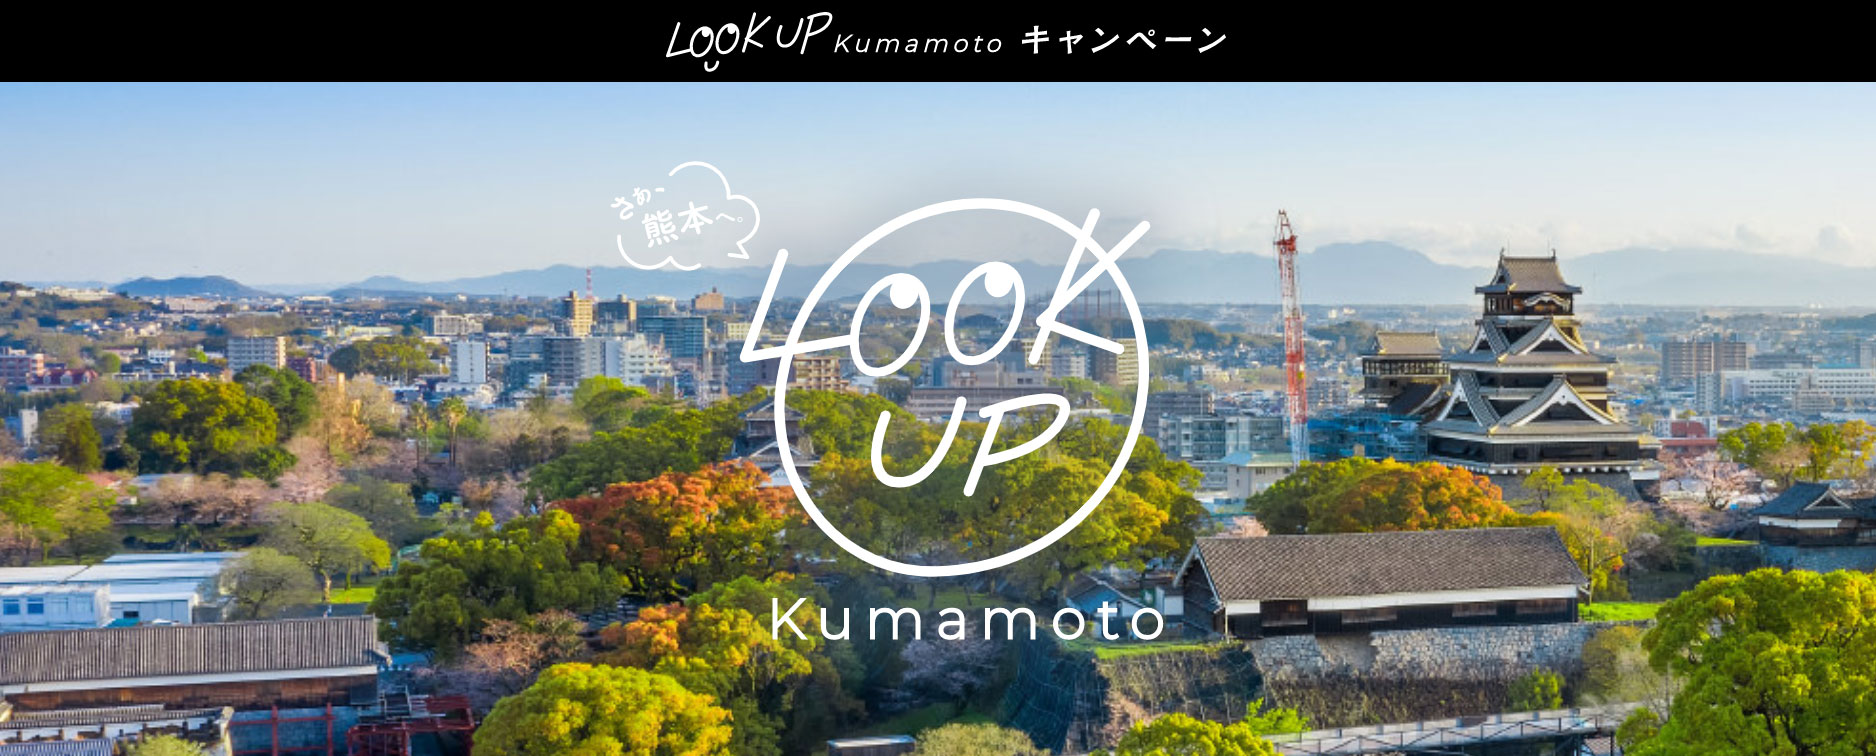 LOOK UP kumamoto キャンペーンの対応を開始しました。